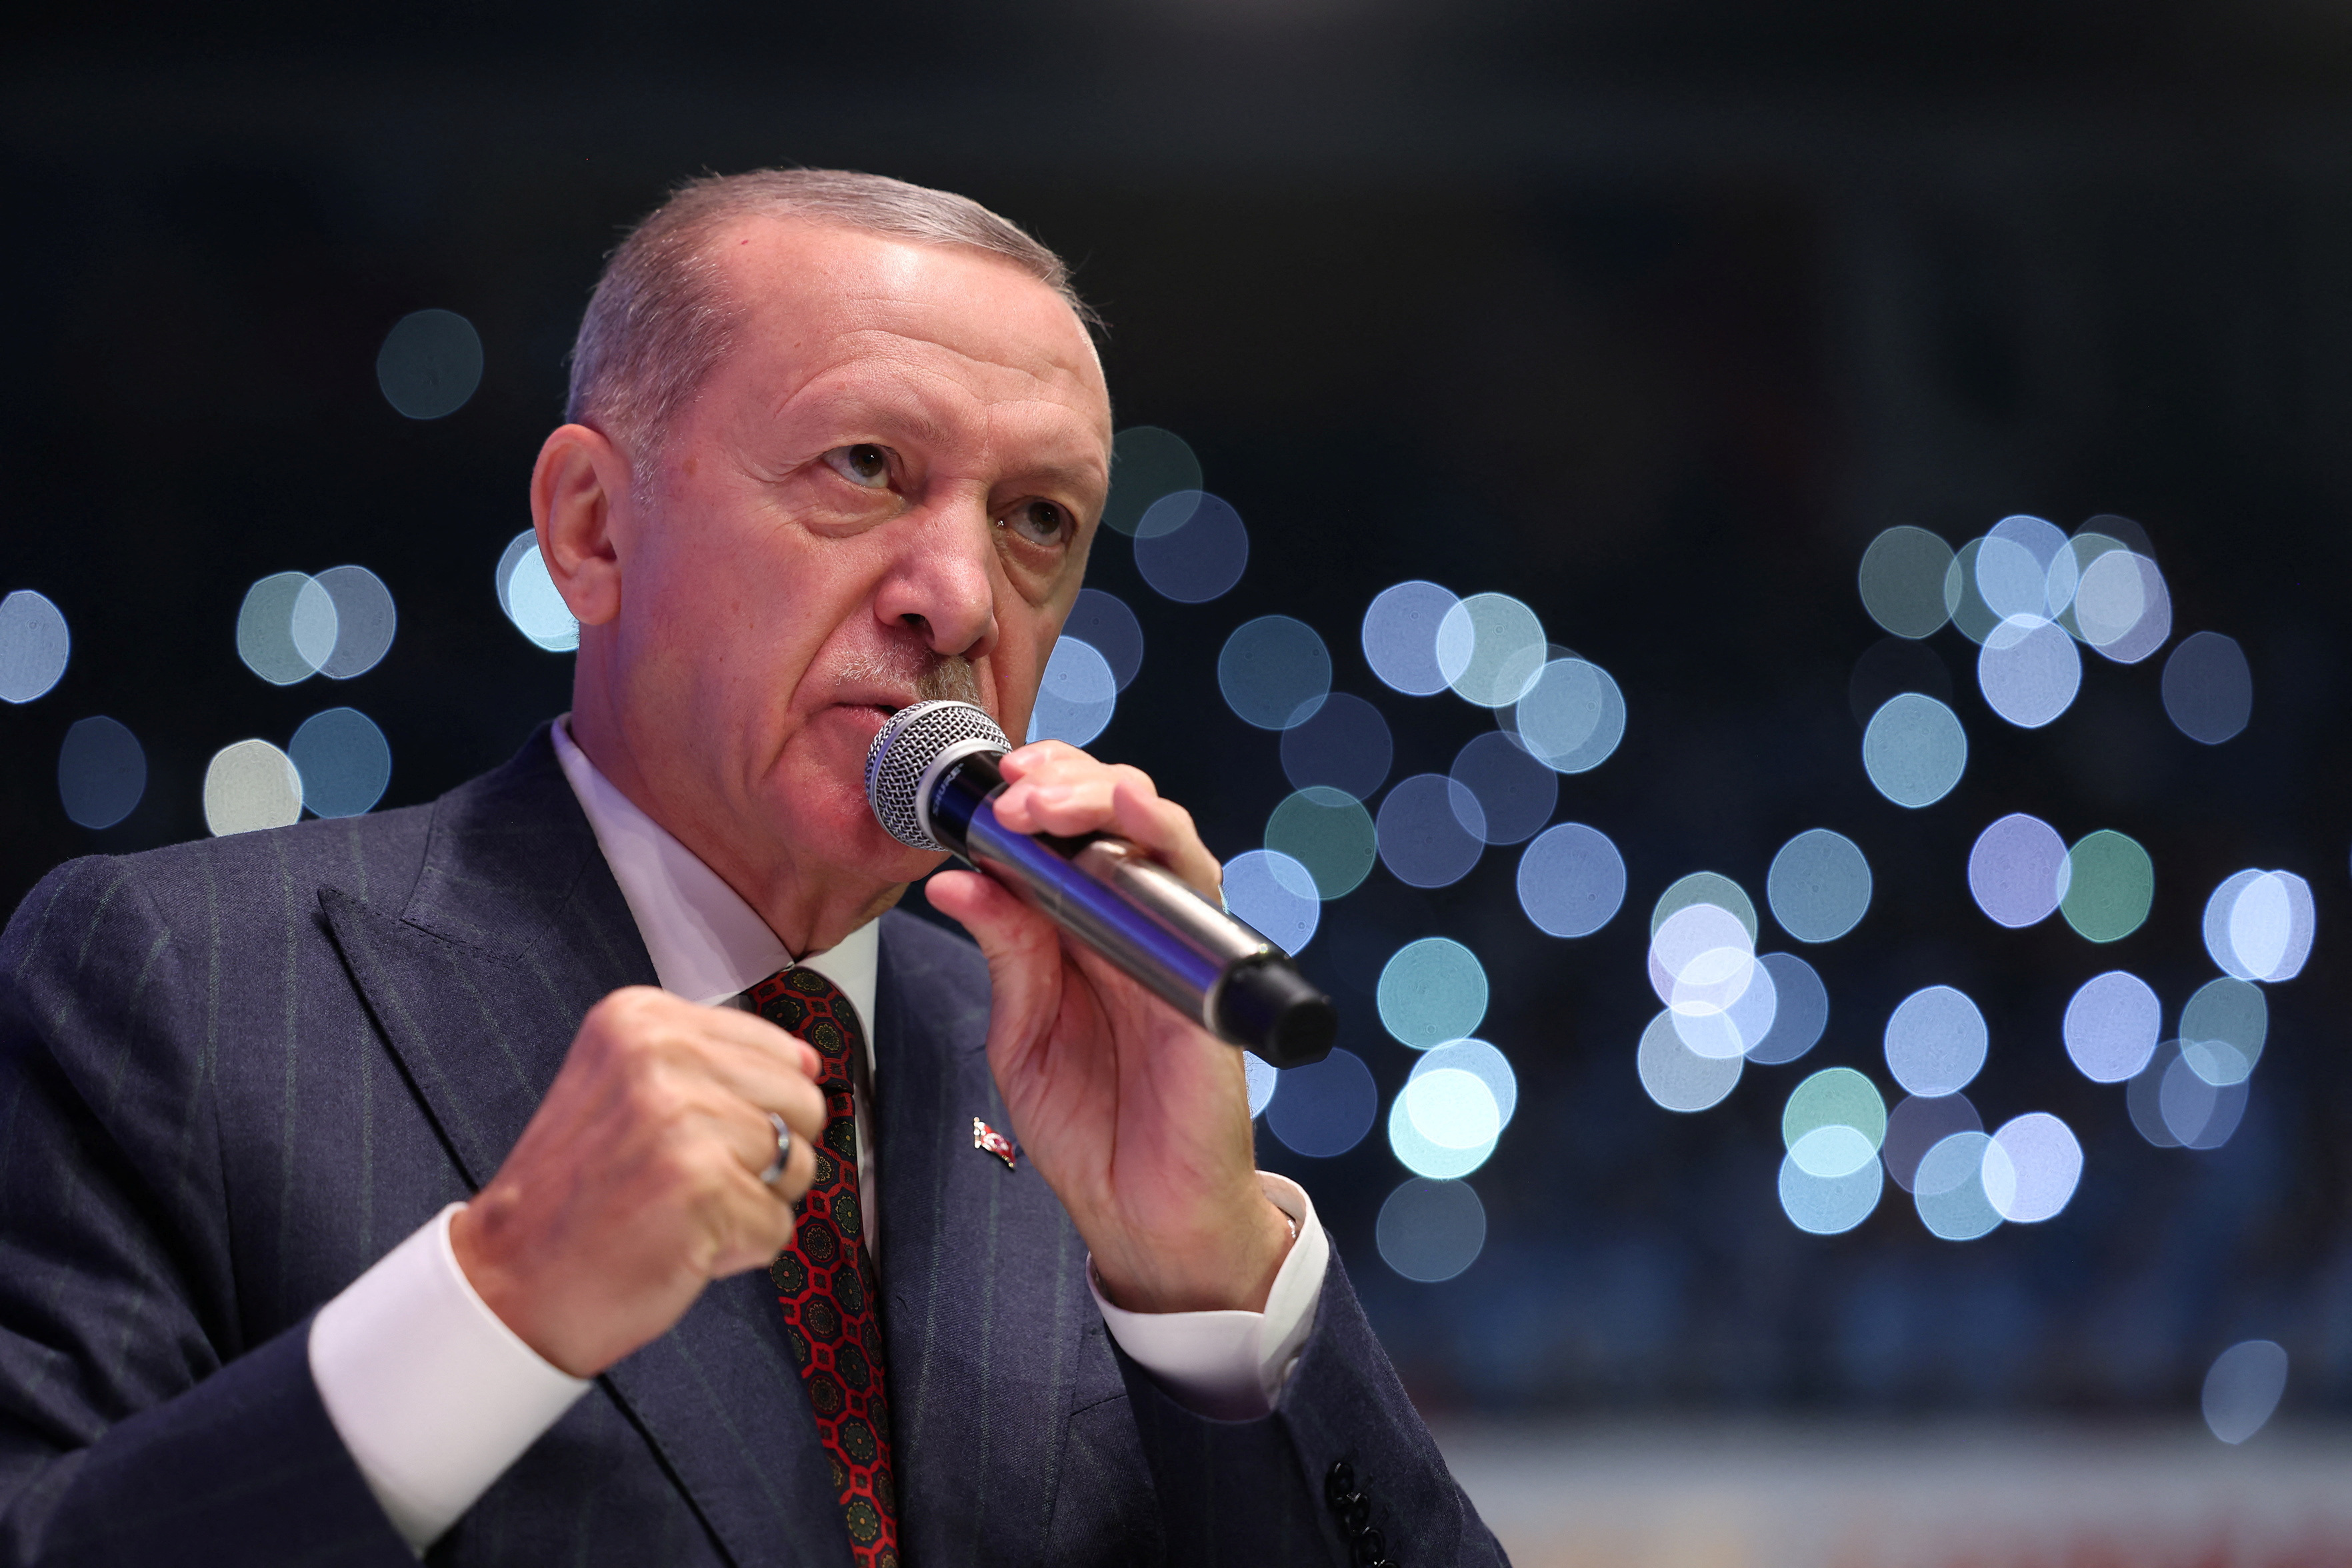 Turkish President Erdogan makes a speech at the Extraordinary Congress of his ruling AK Party in Ankara